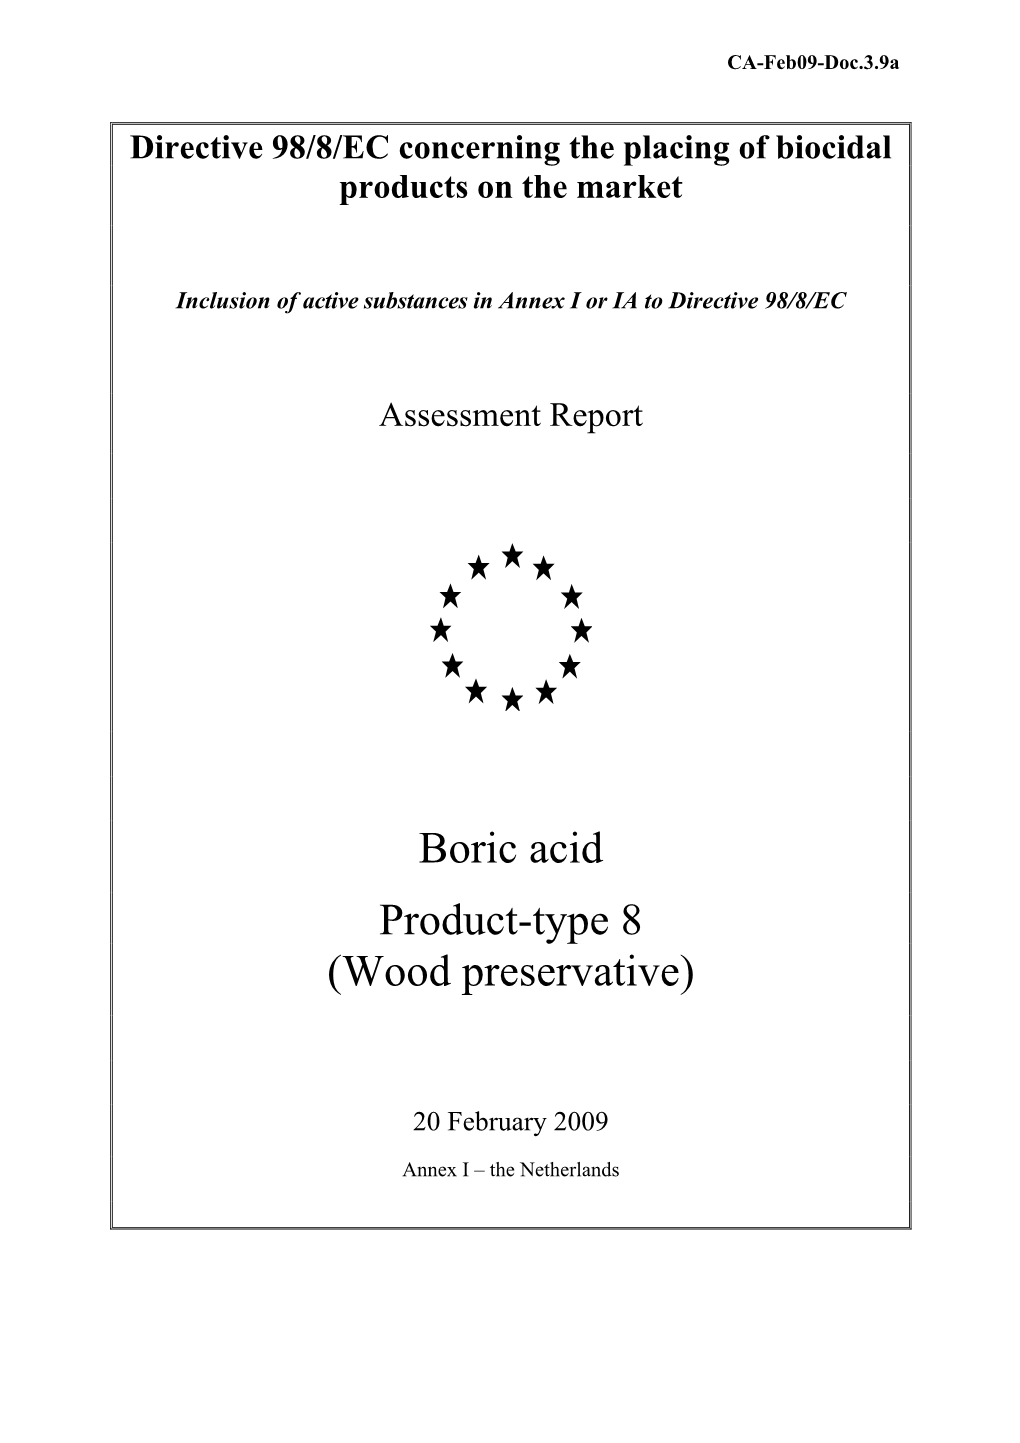 Boric Acid Product-Type 8 (Wood Preservative)